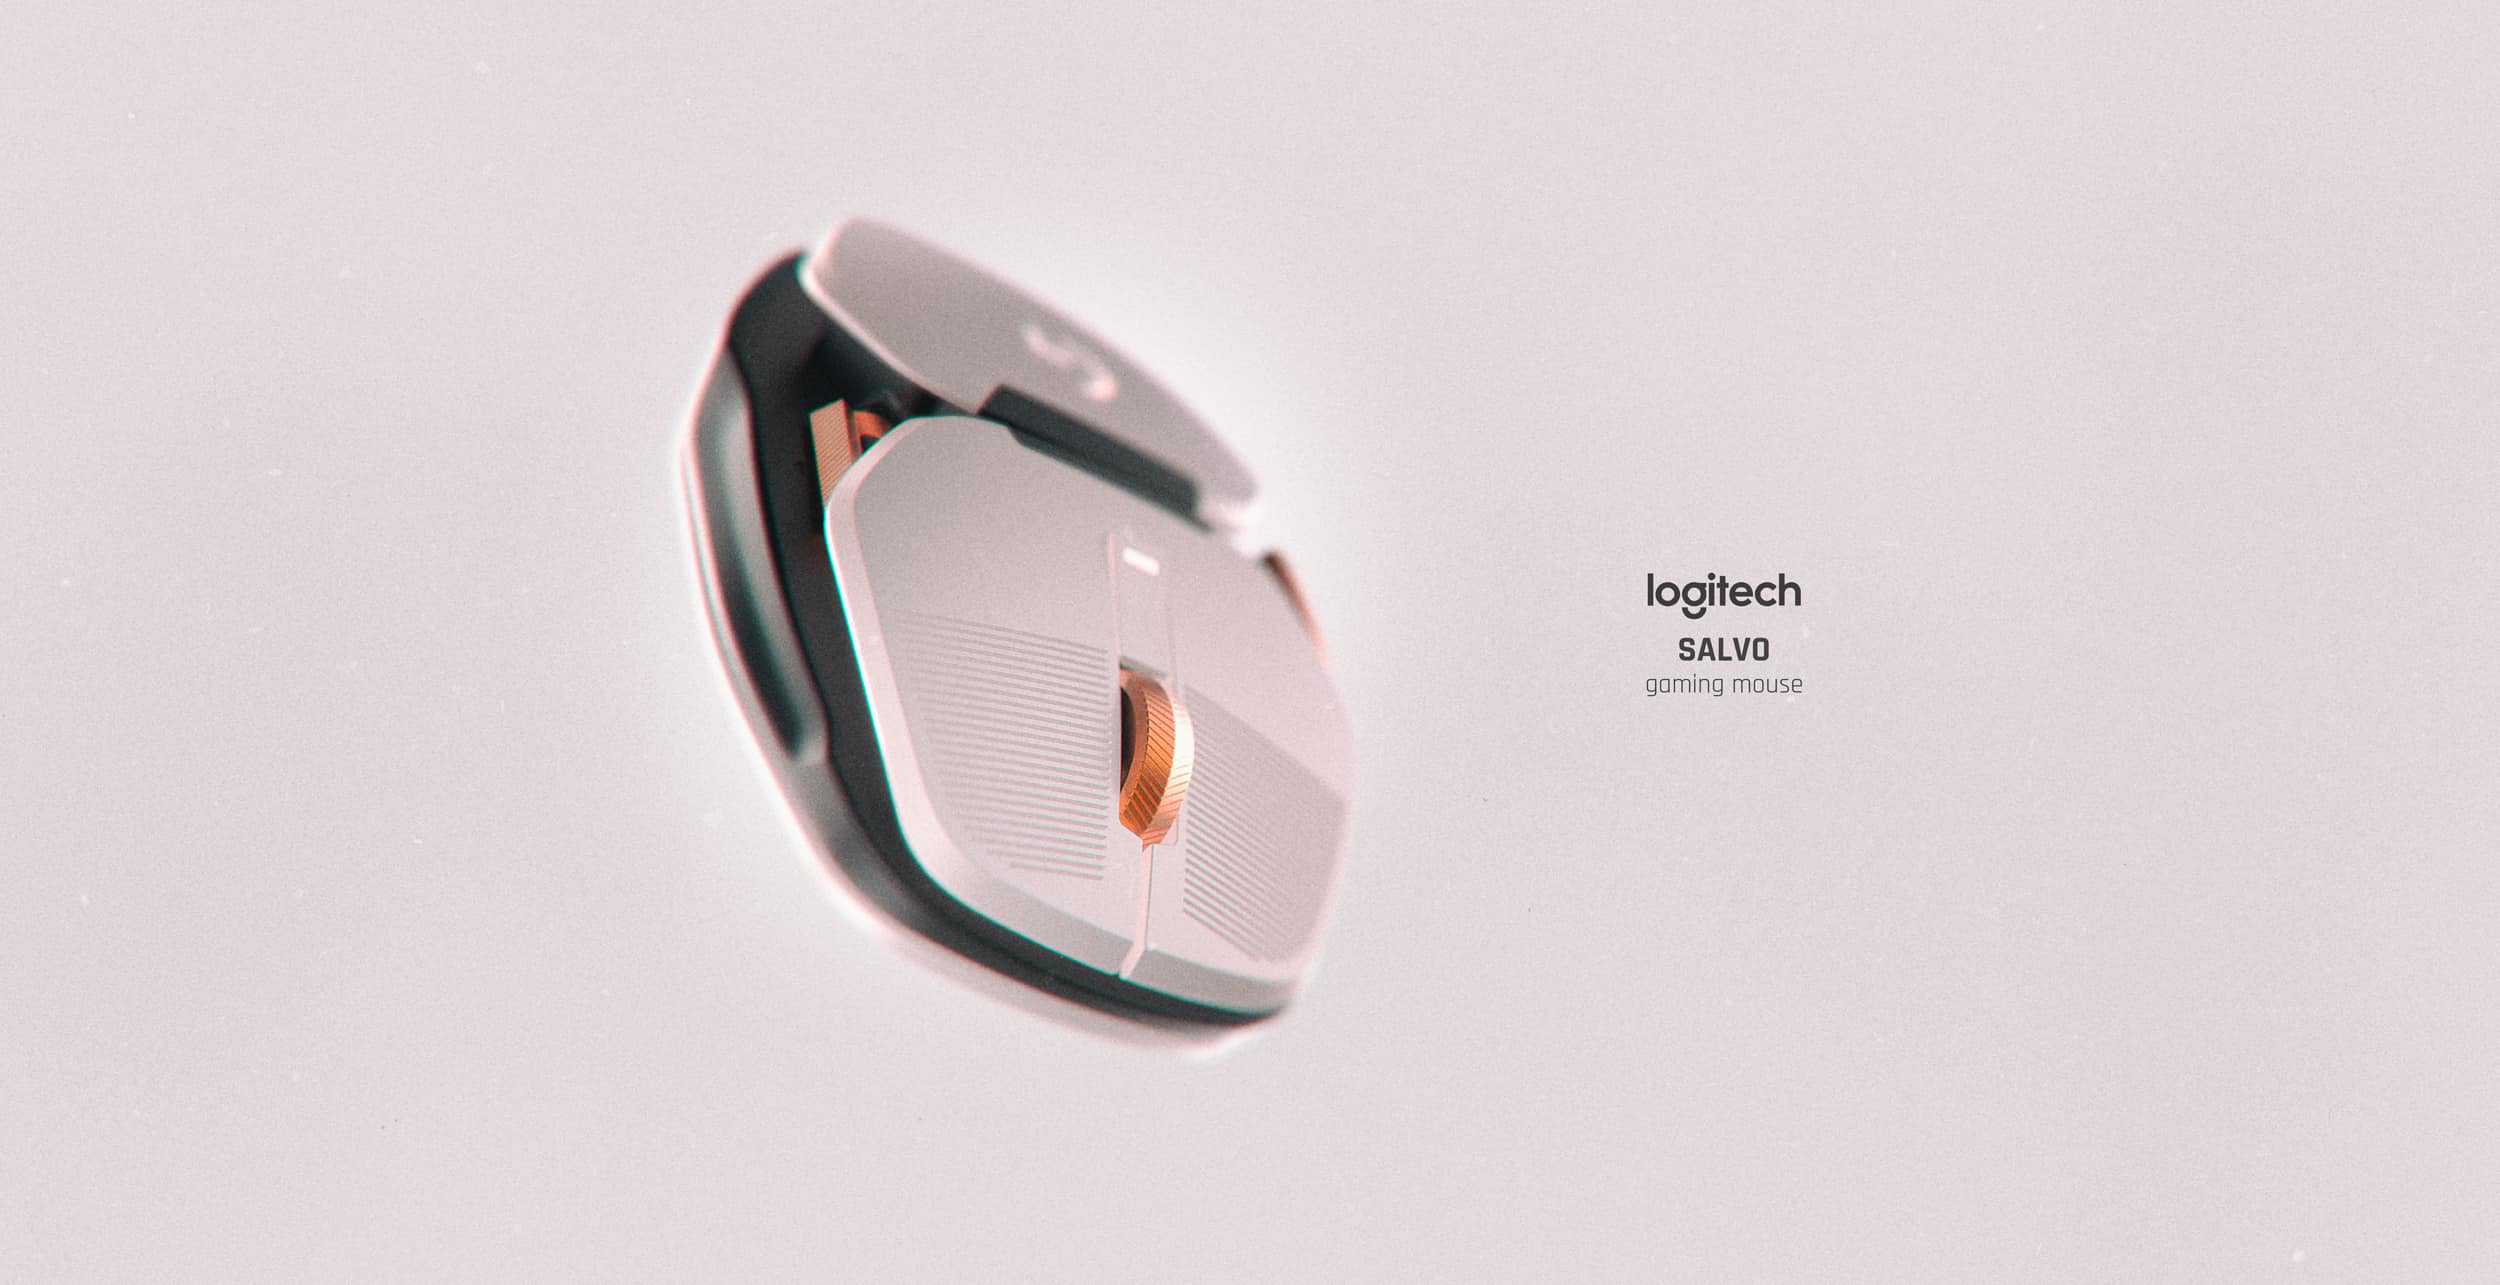 Logitech Salvo - Gaming Mouse Concept